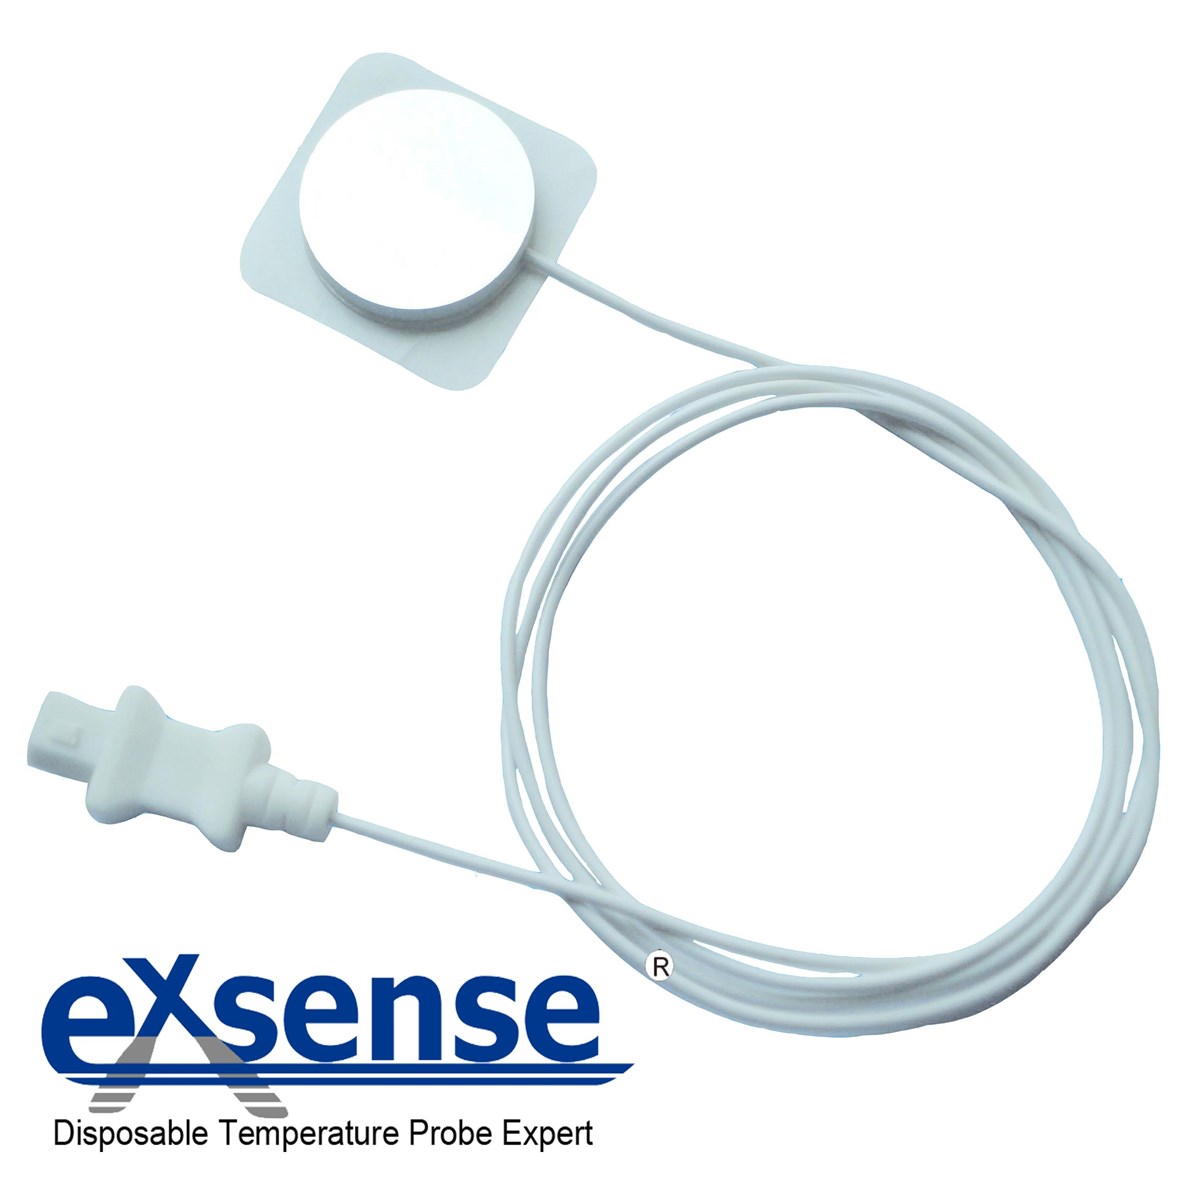 Disposable Medical Skin Temperature Sensor Probe YSI400 Medical Sterilization Probes for Adult and Infant